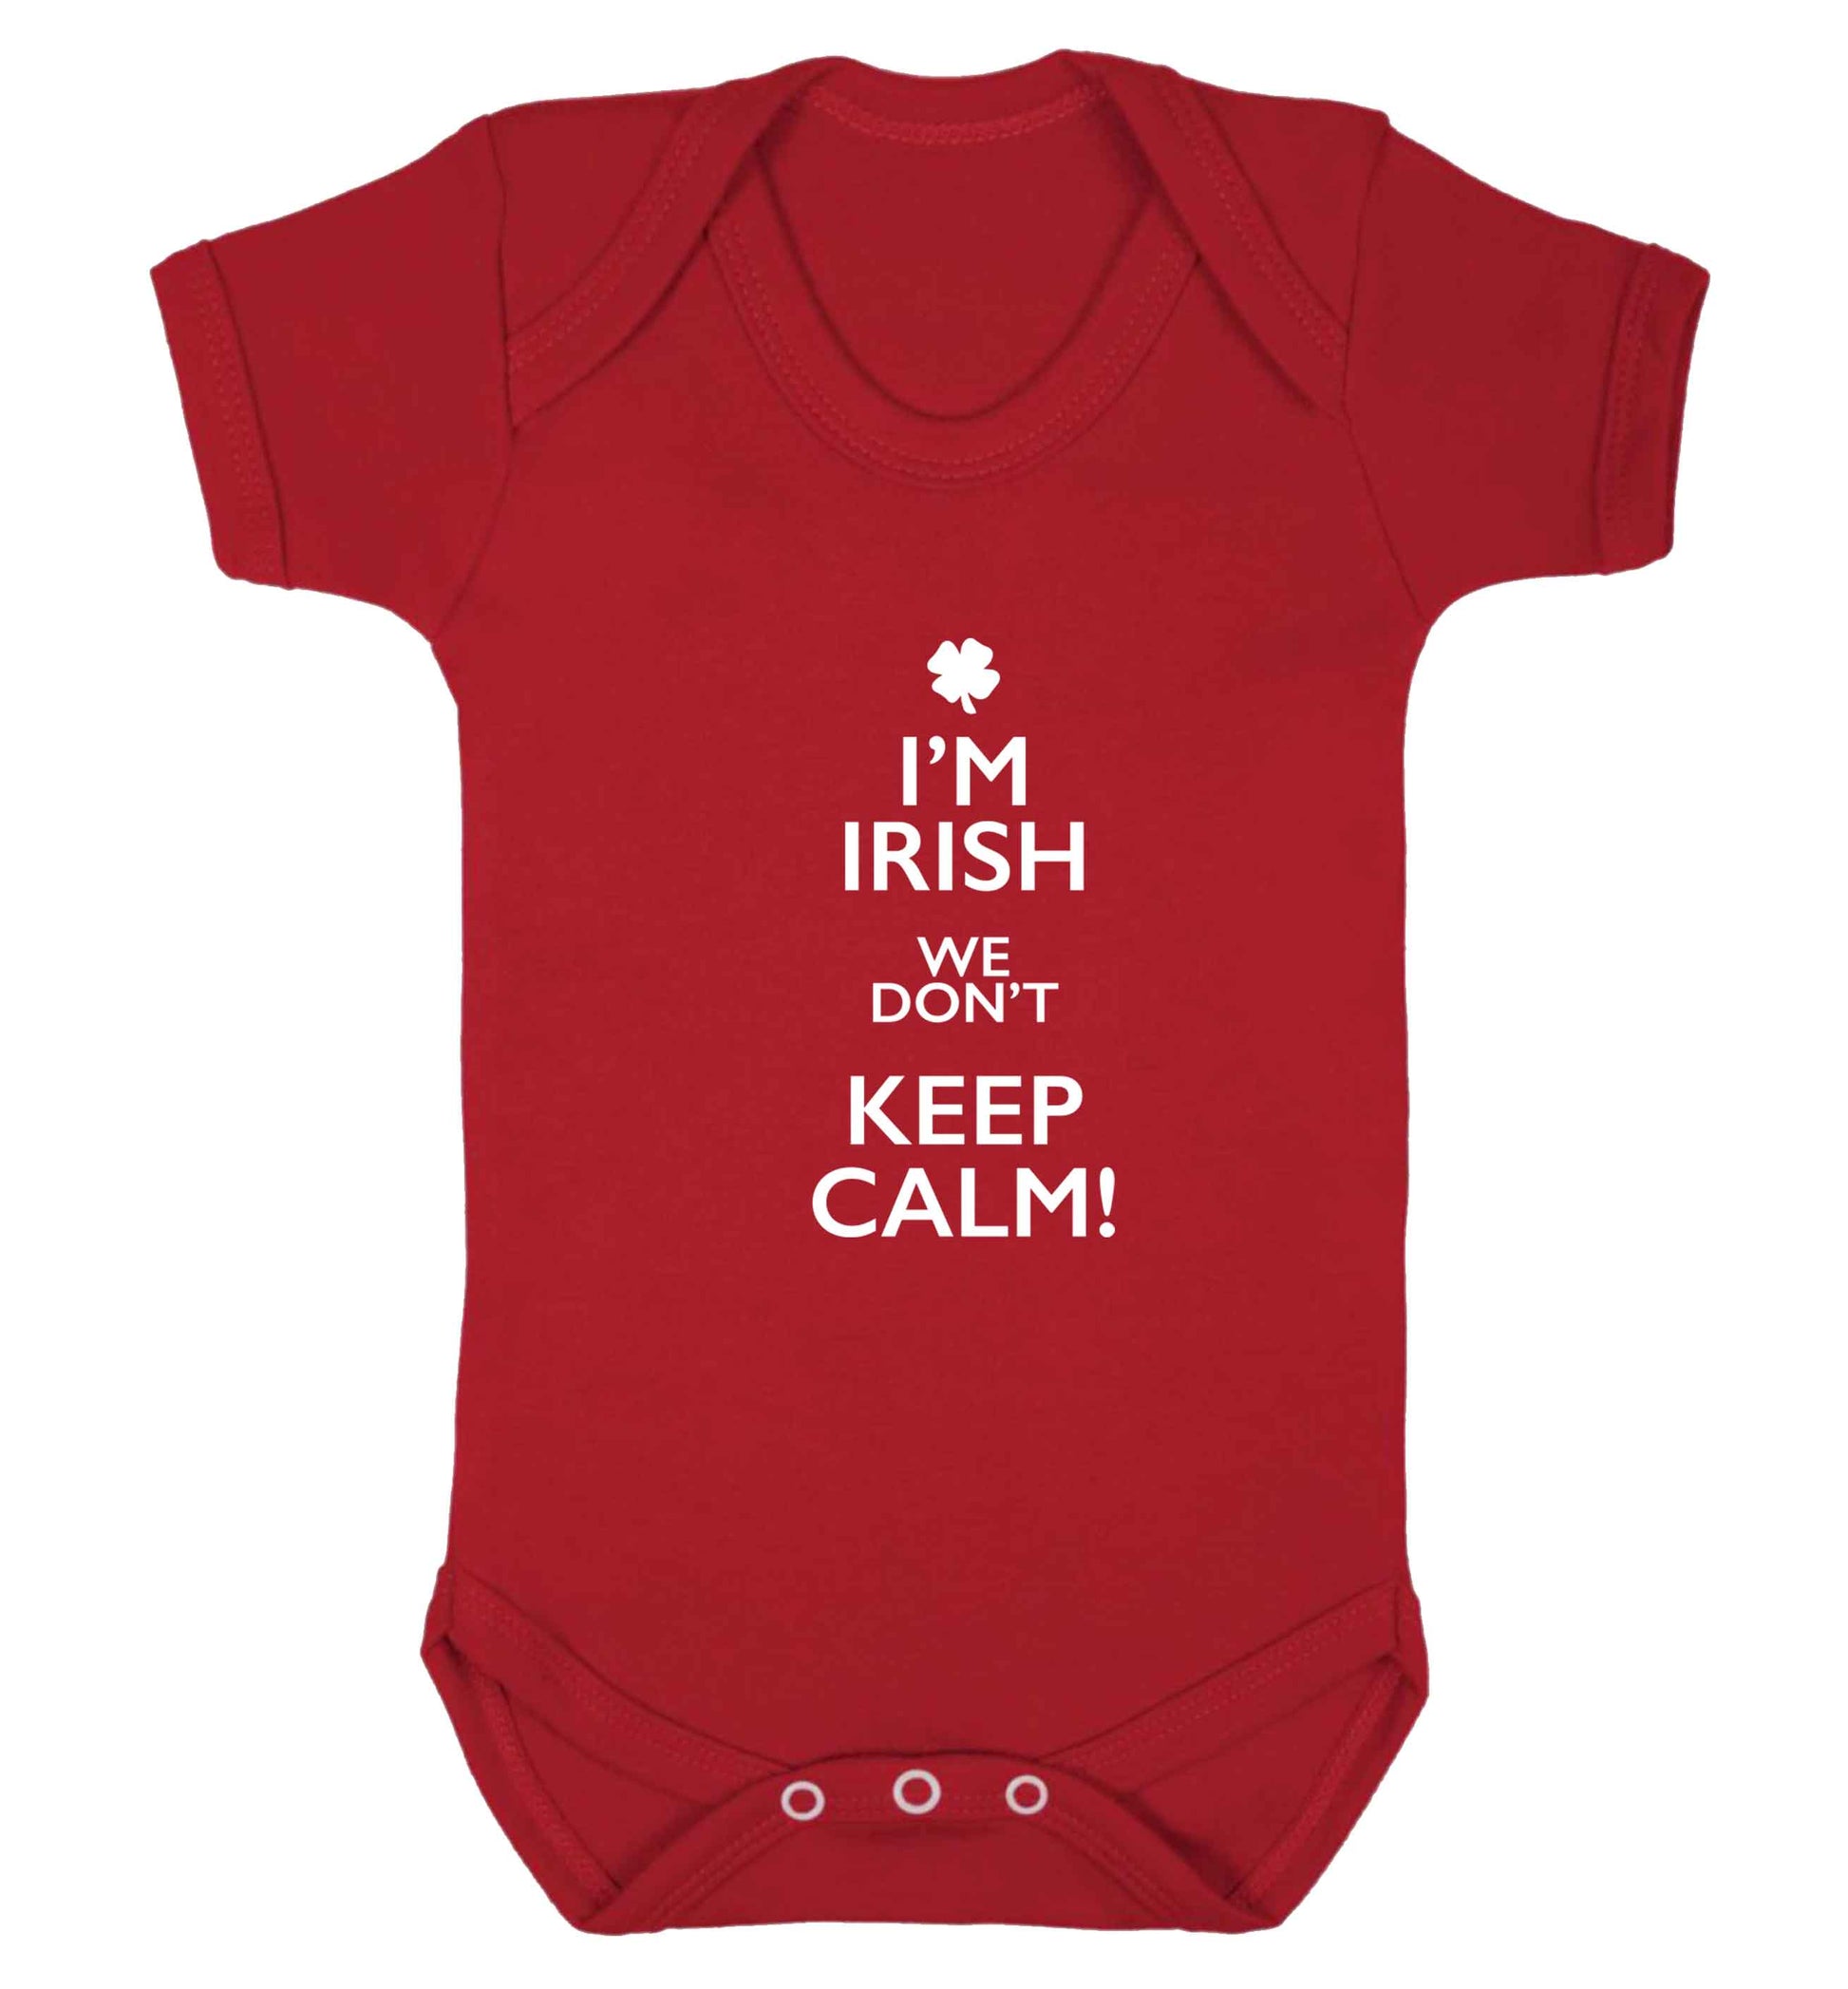 I'm Irish we don't keep calm baby vest red 18-24 months